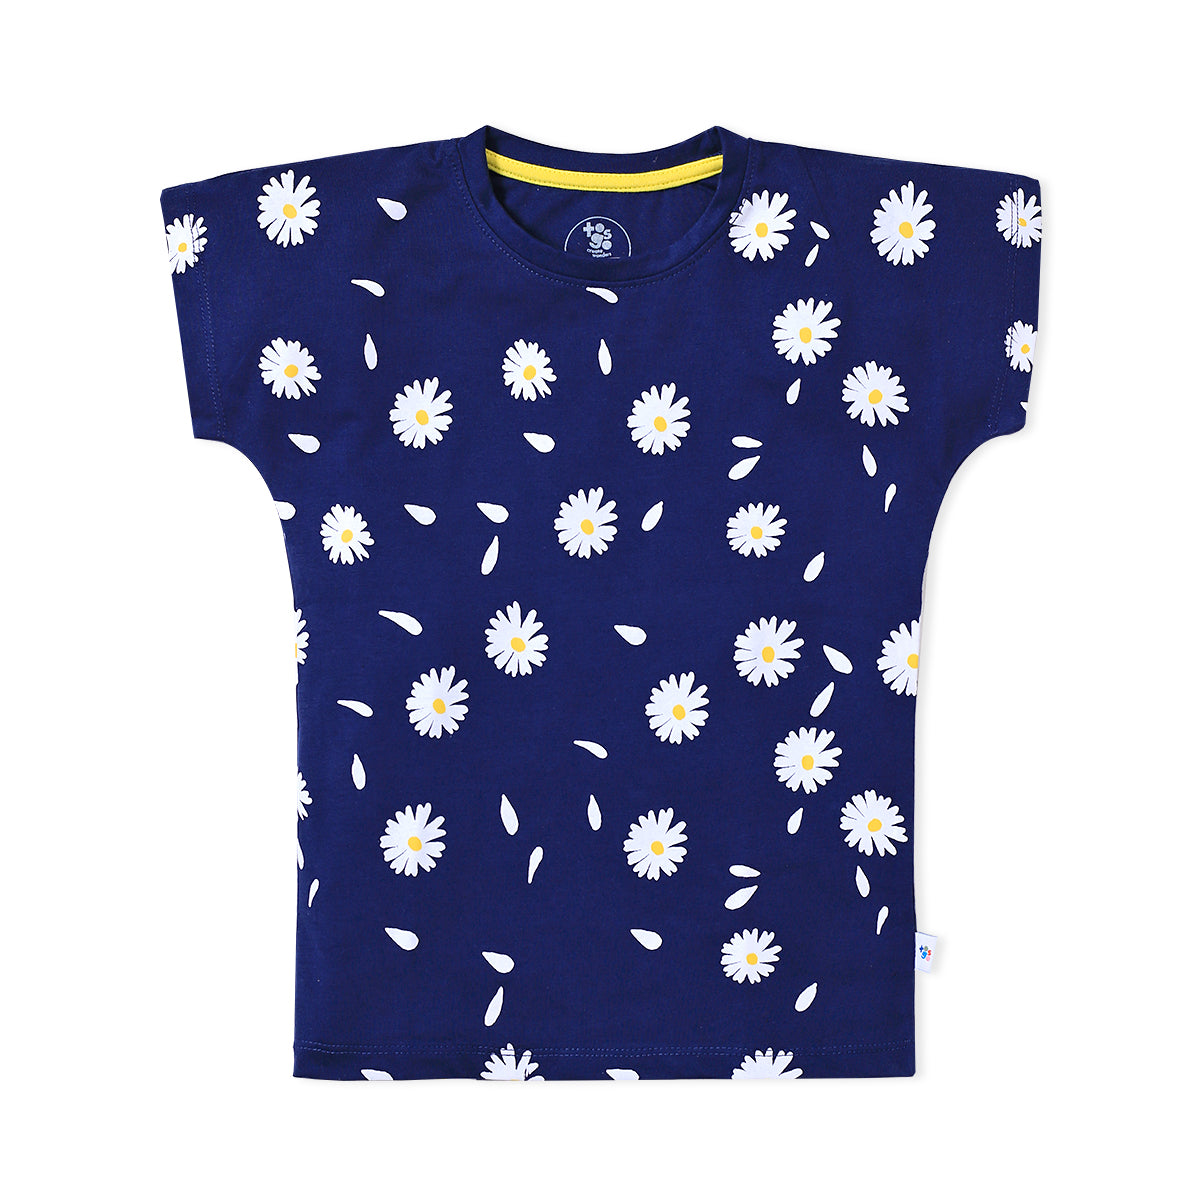 Floral Navy T-shirt